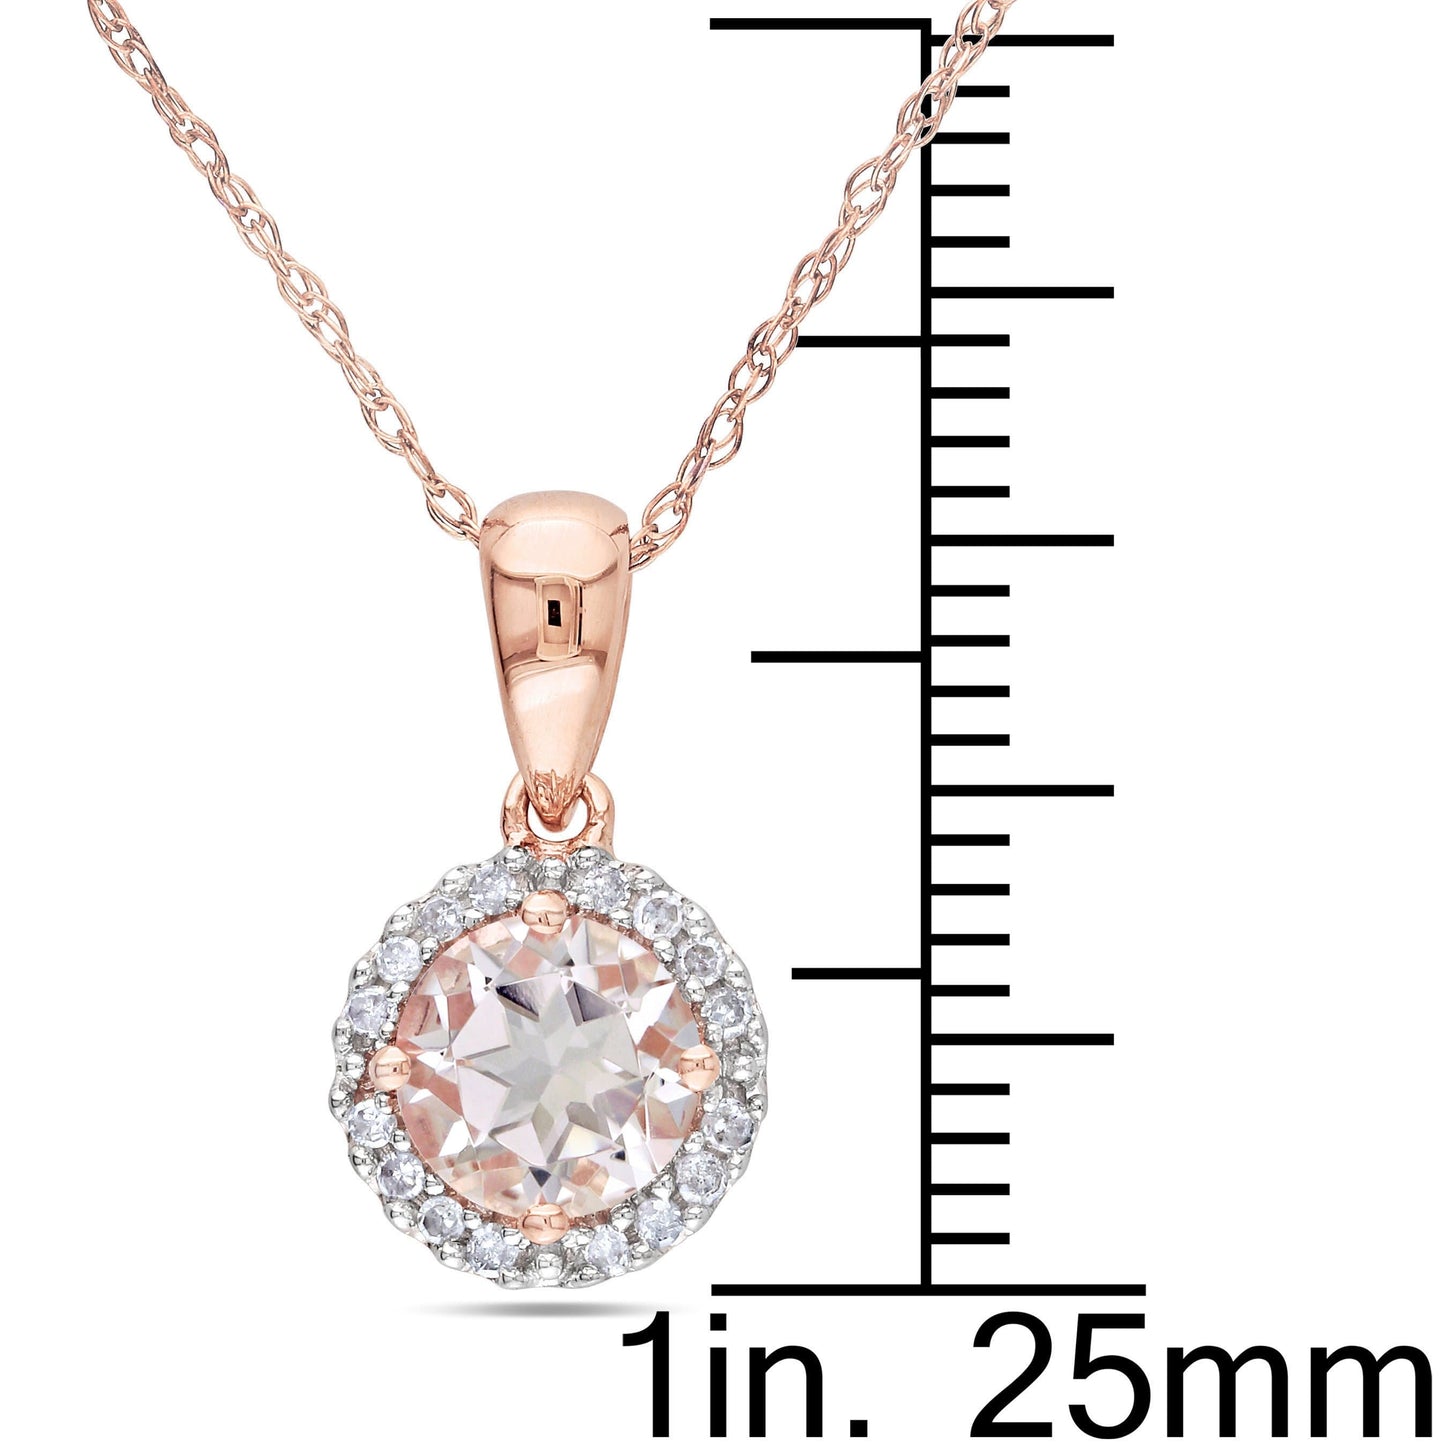 Sophia B 4/5ct Morganite Necklace with Diamond Accents